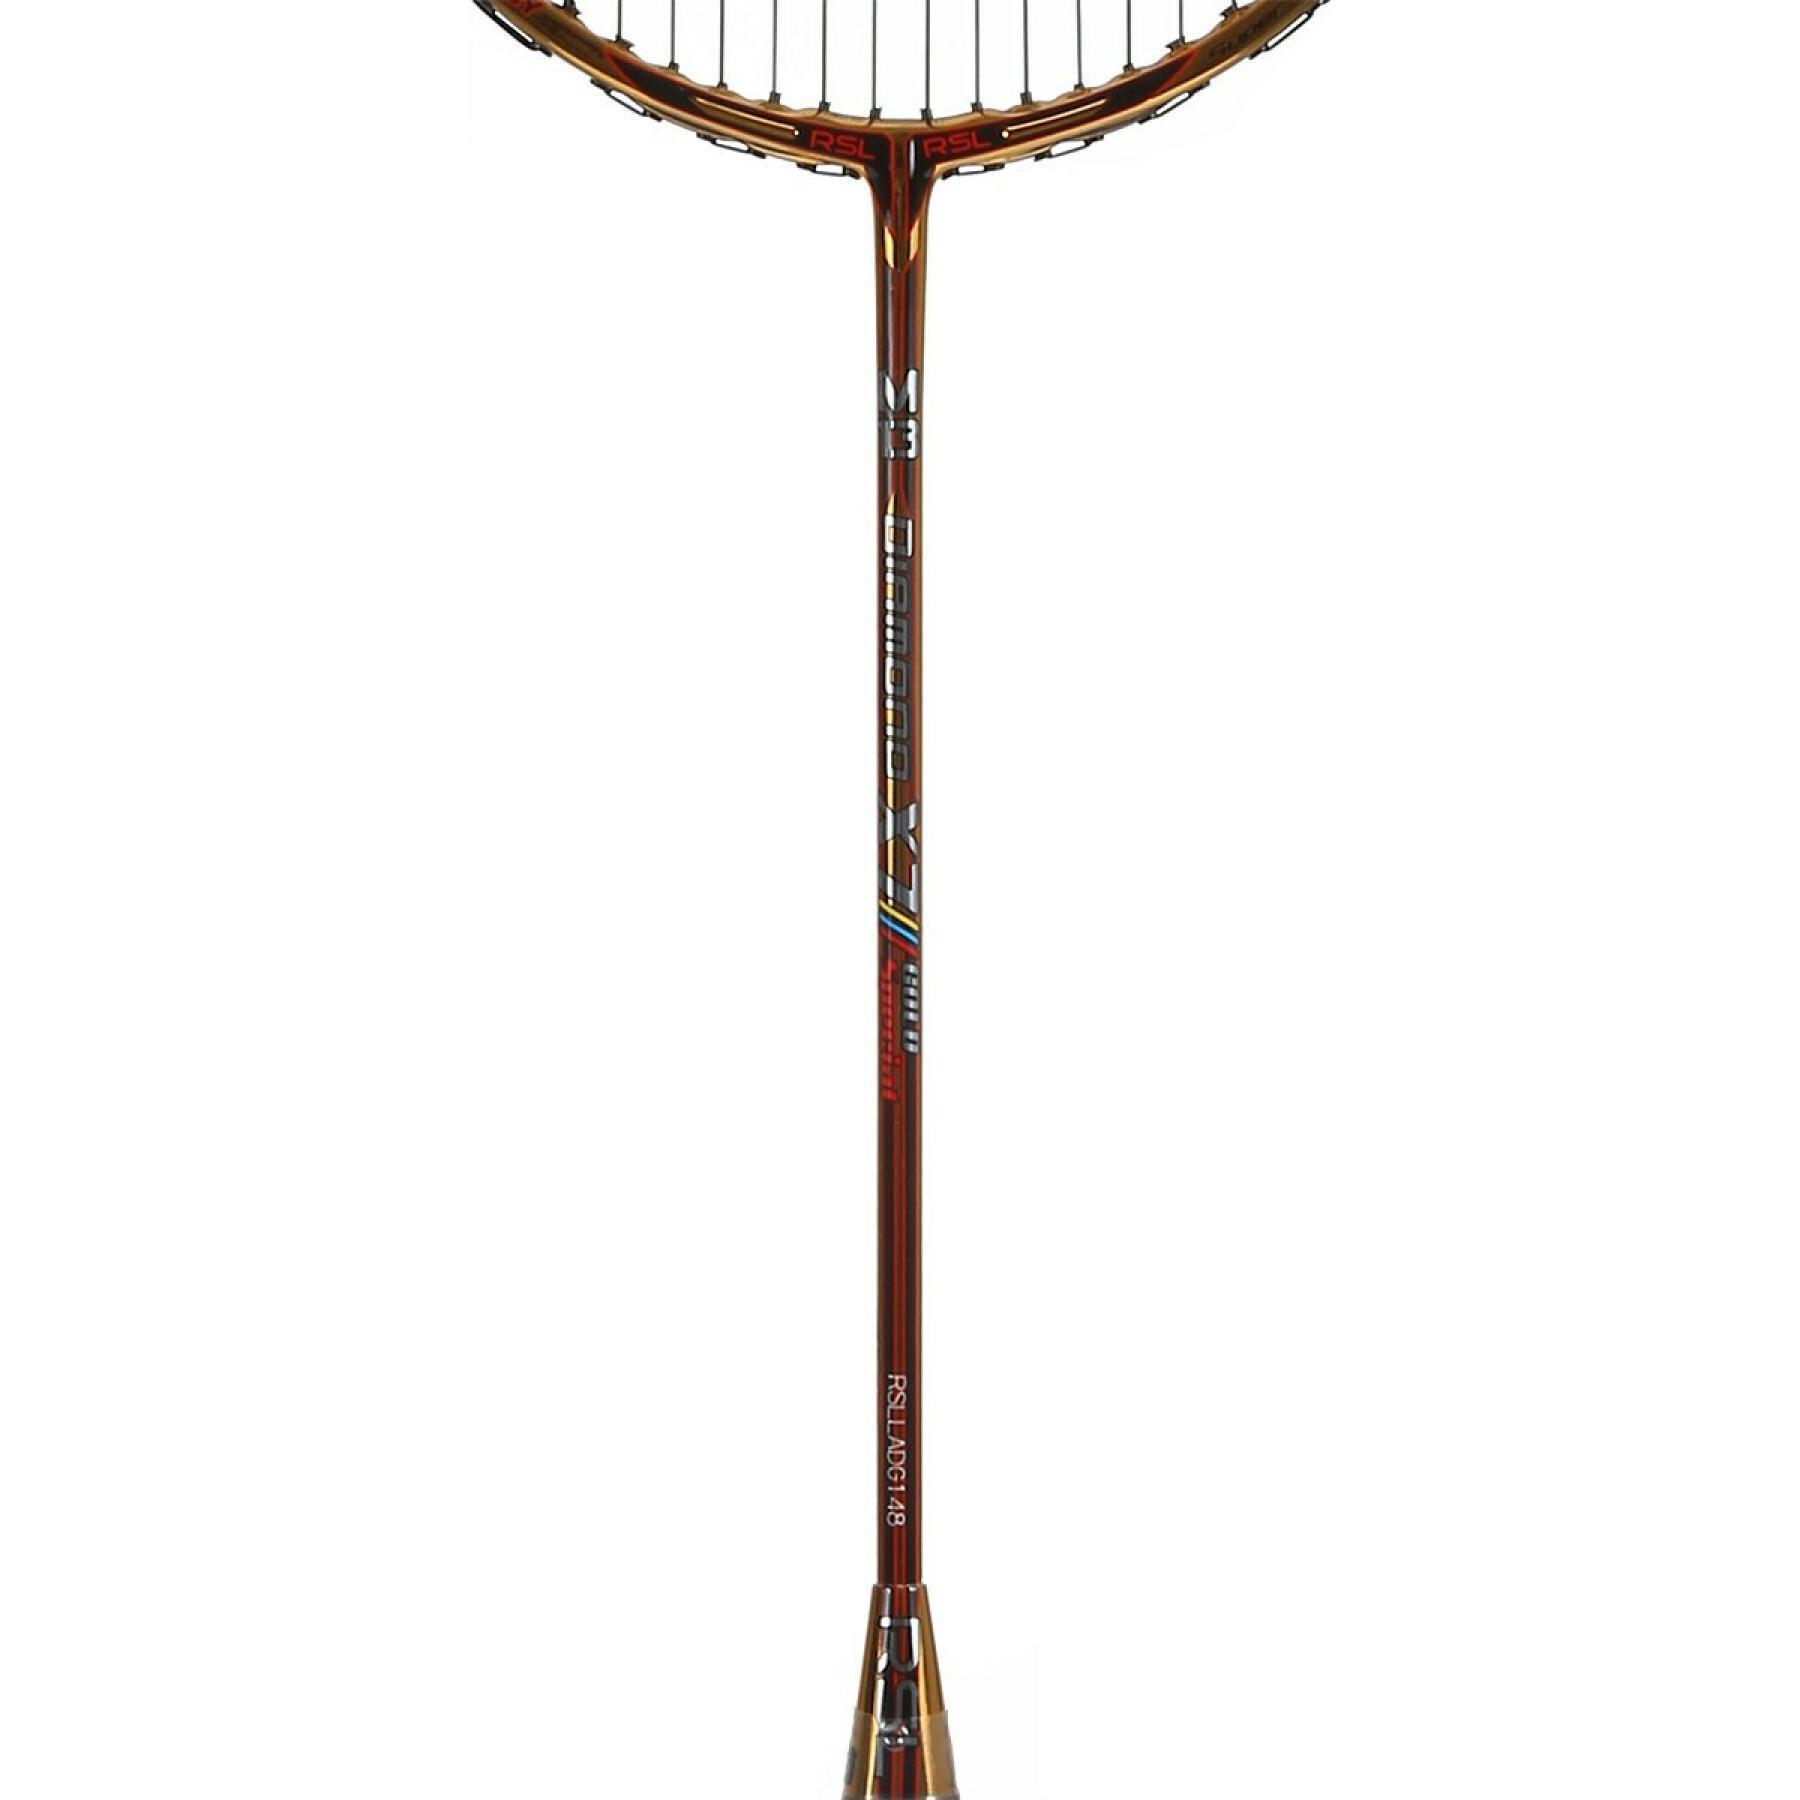 Badmintonracket RSL X7